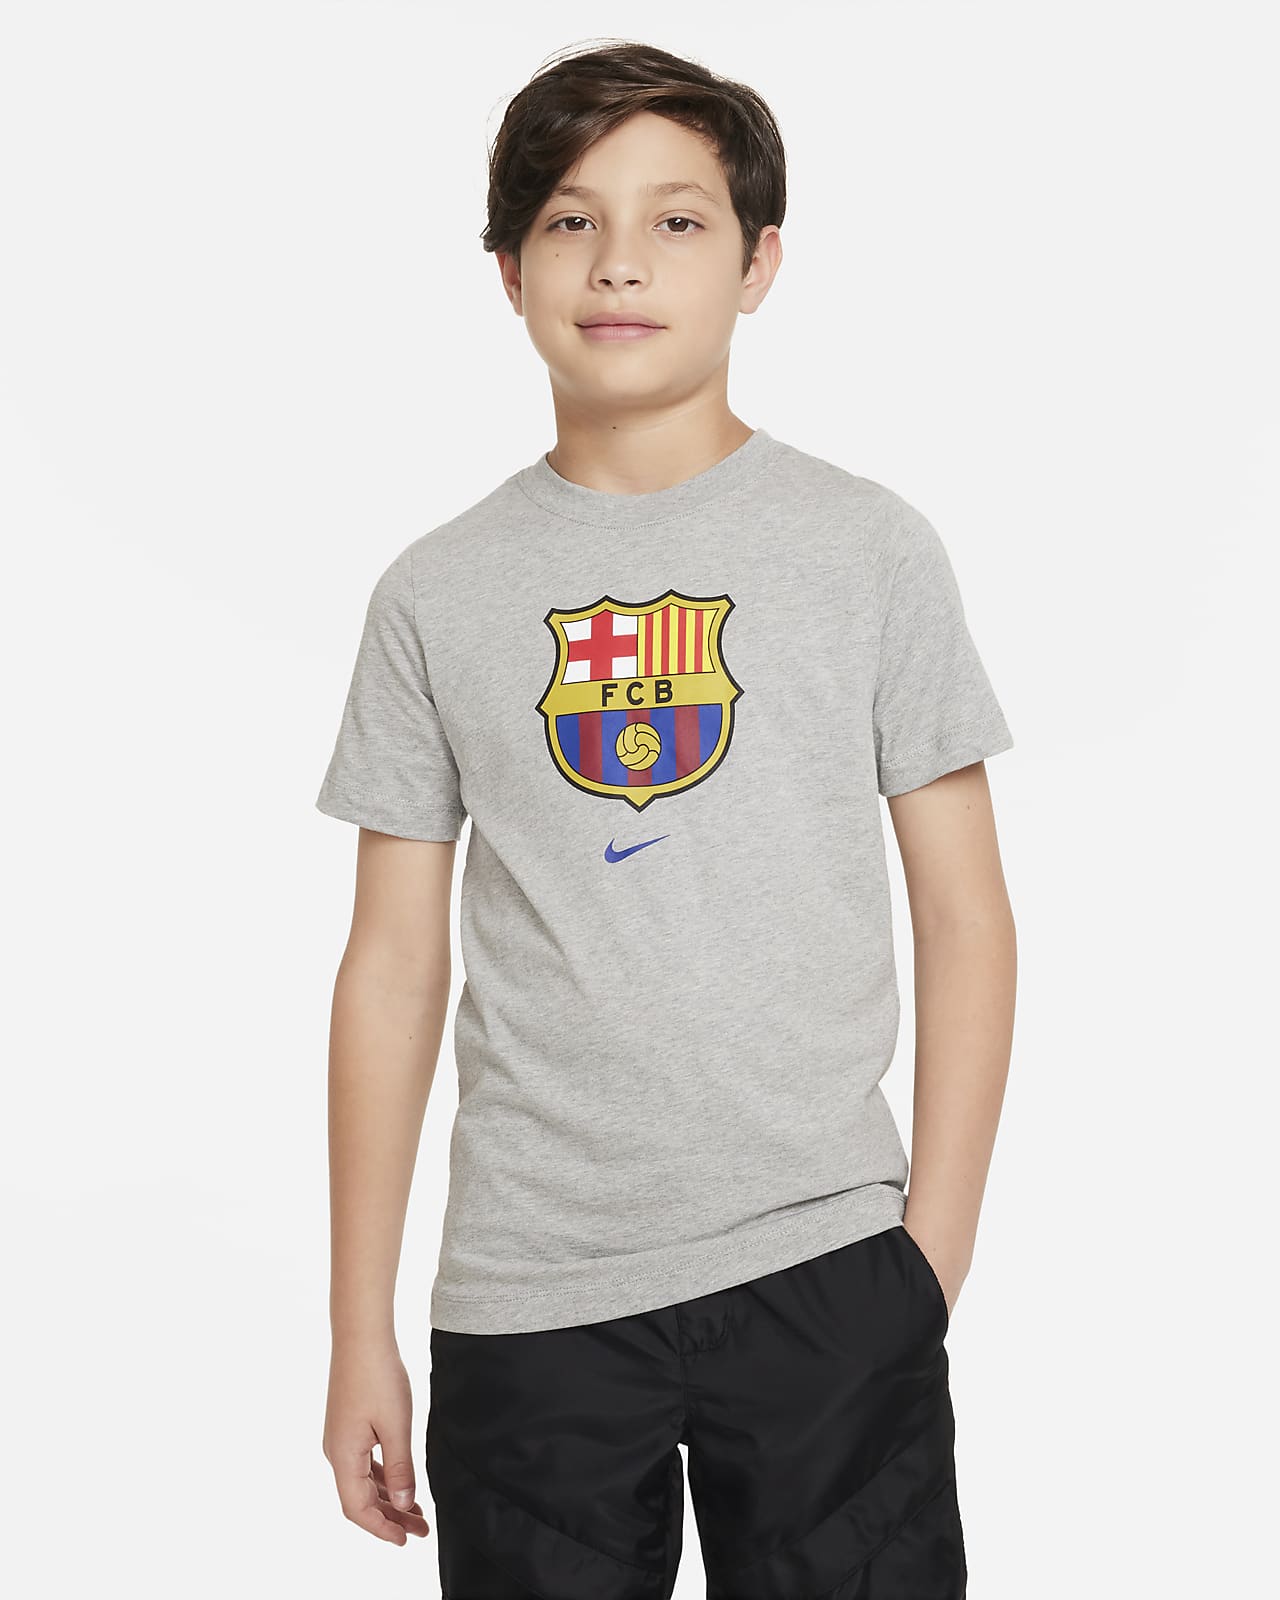 FC Barcelona Crest Camiseta Nike - Niño/a